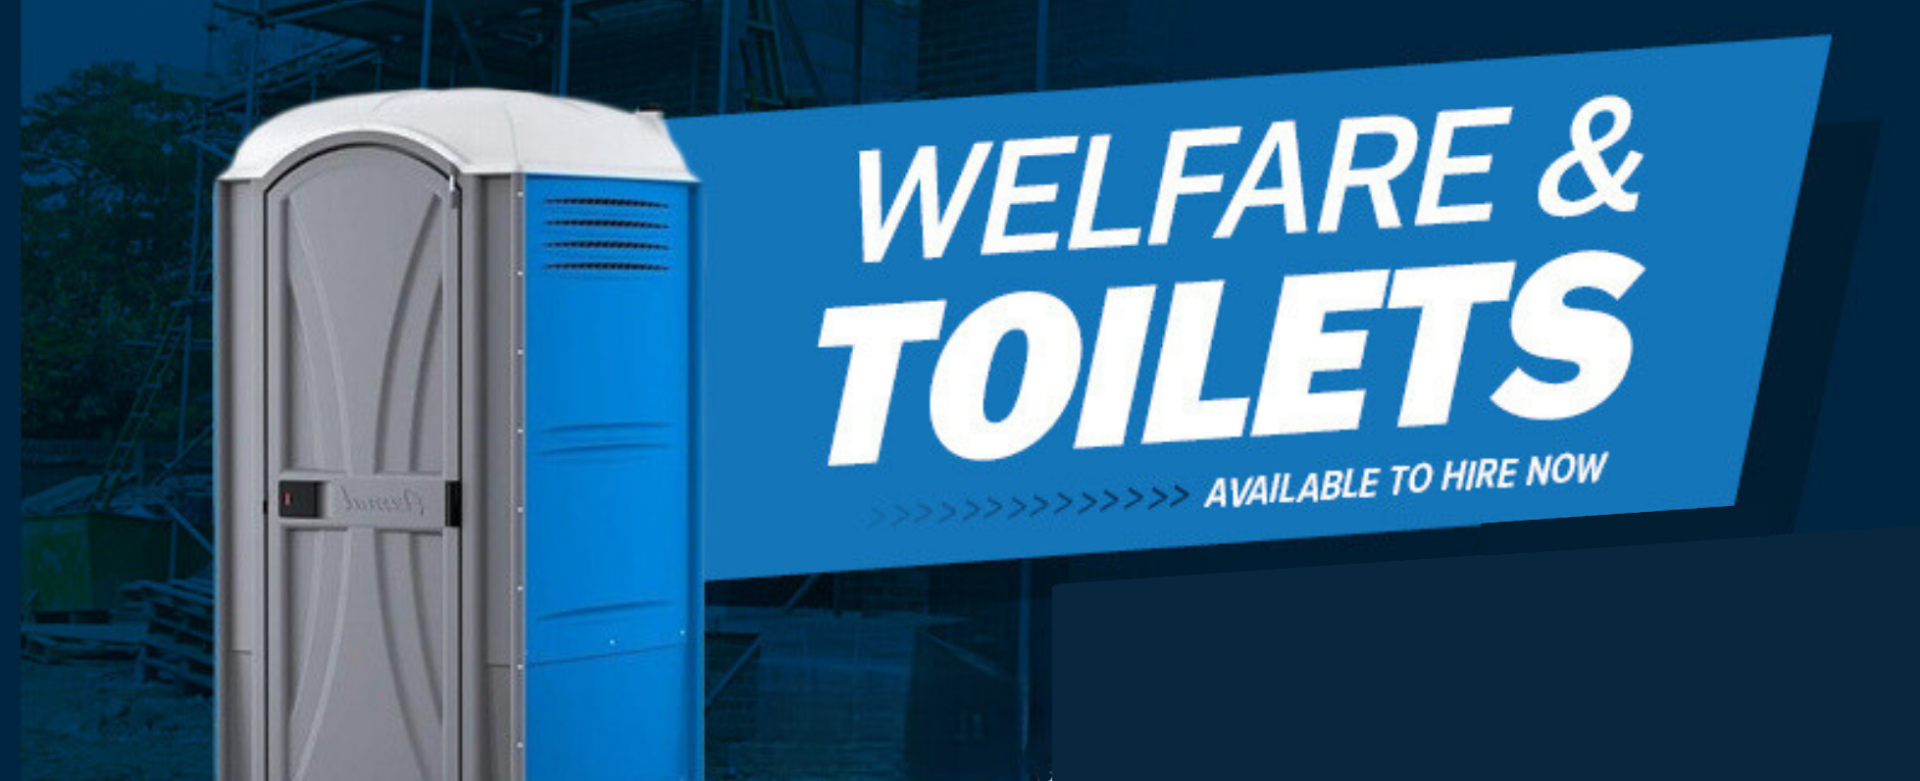 Tool_Hire_welfare_banner